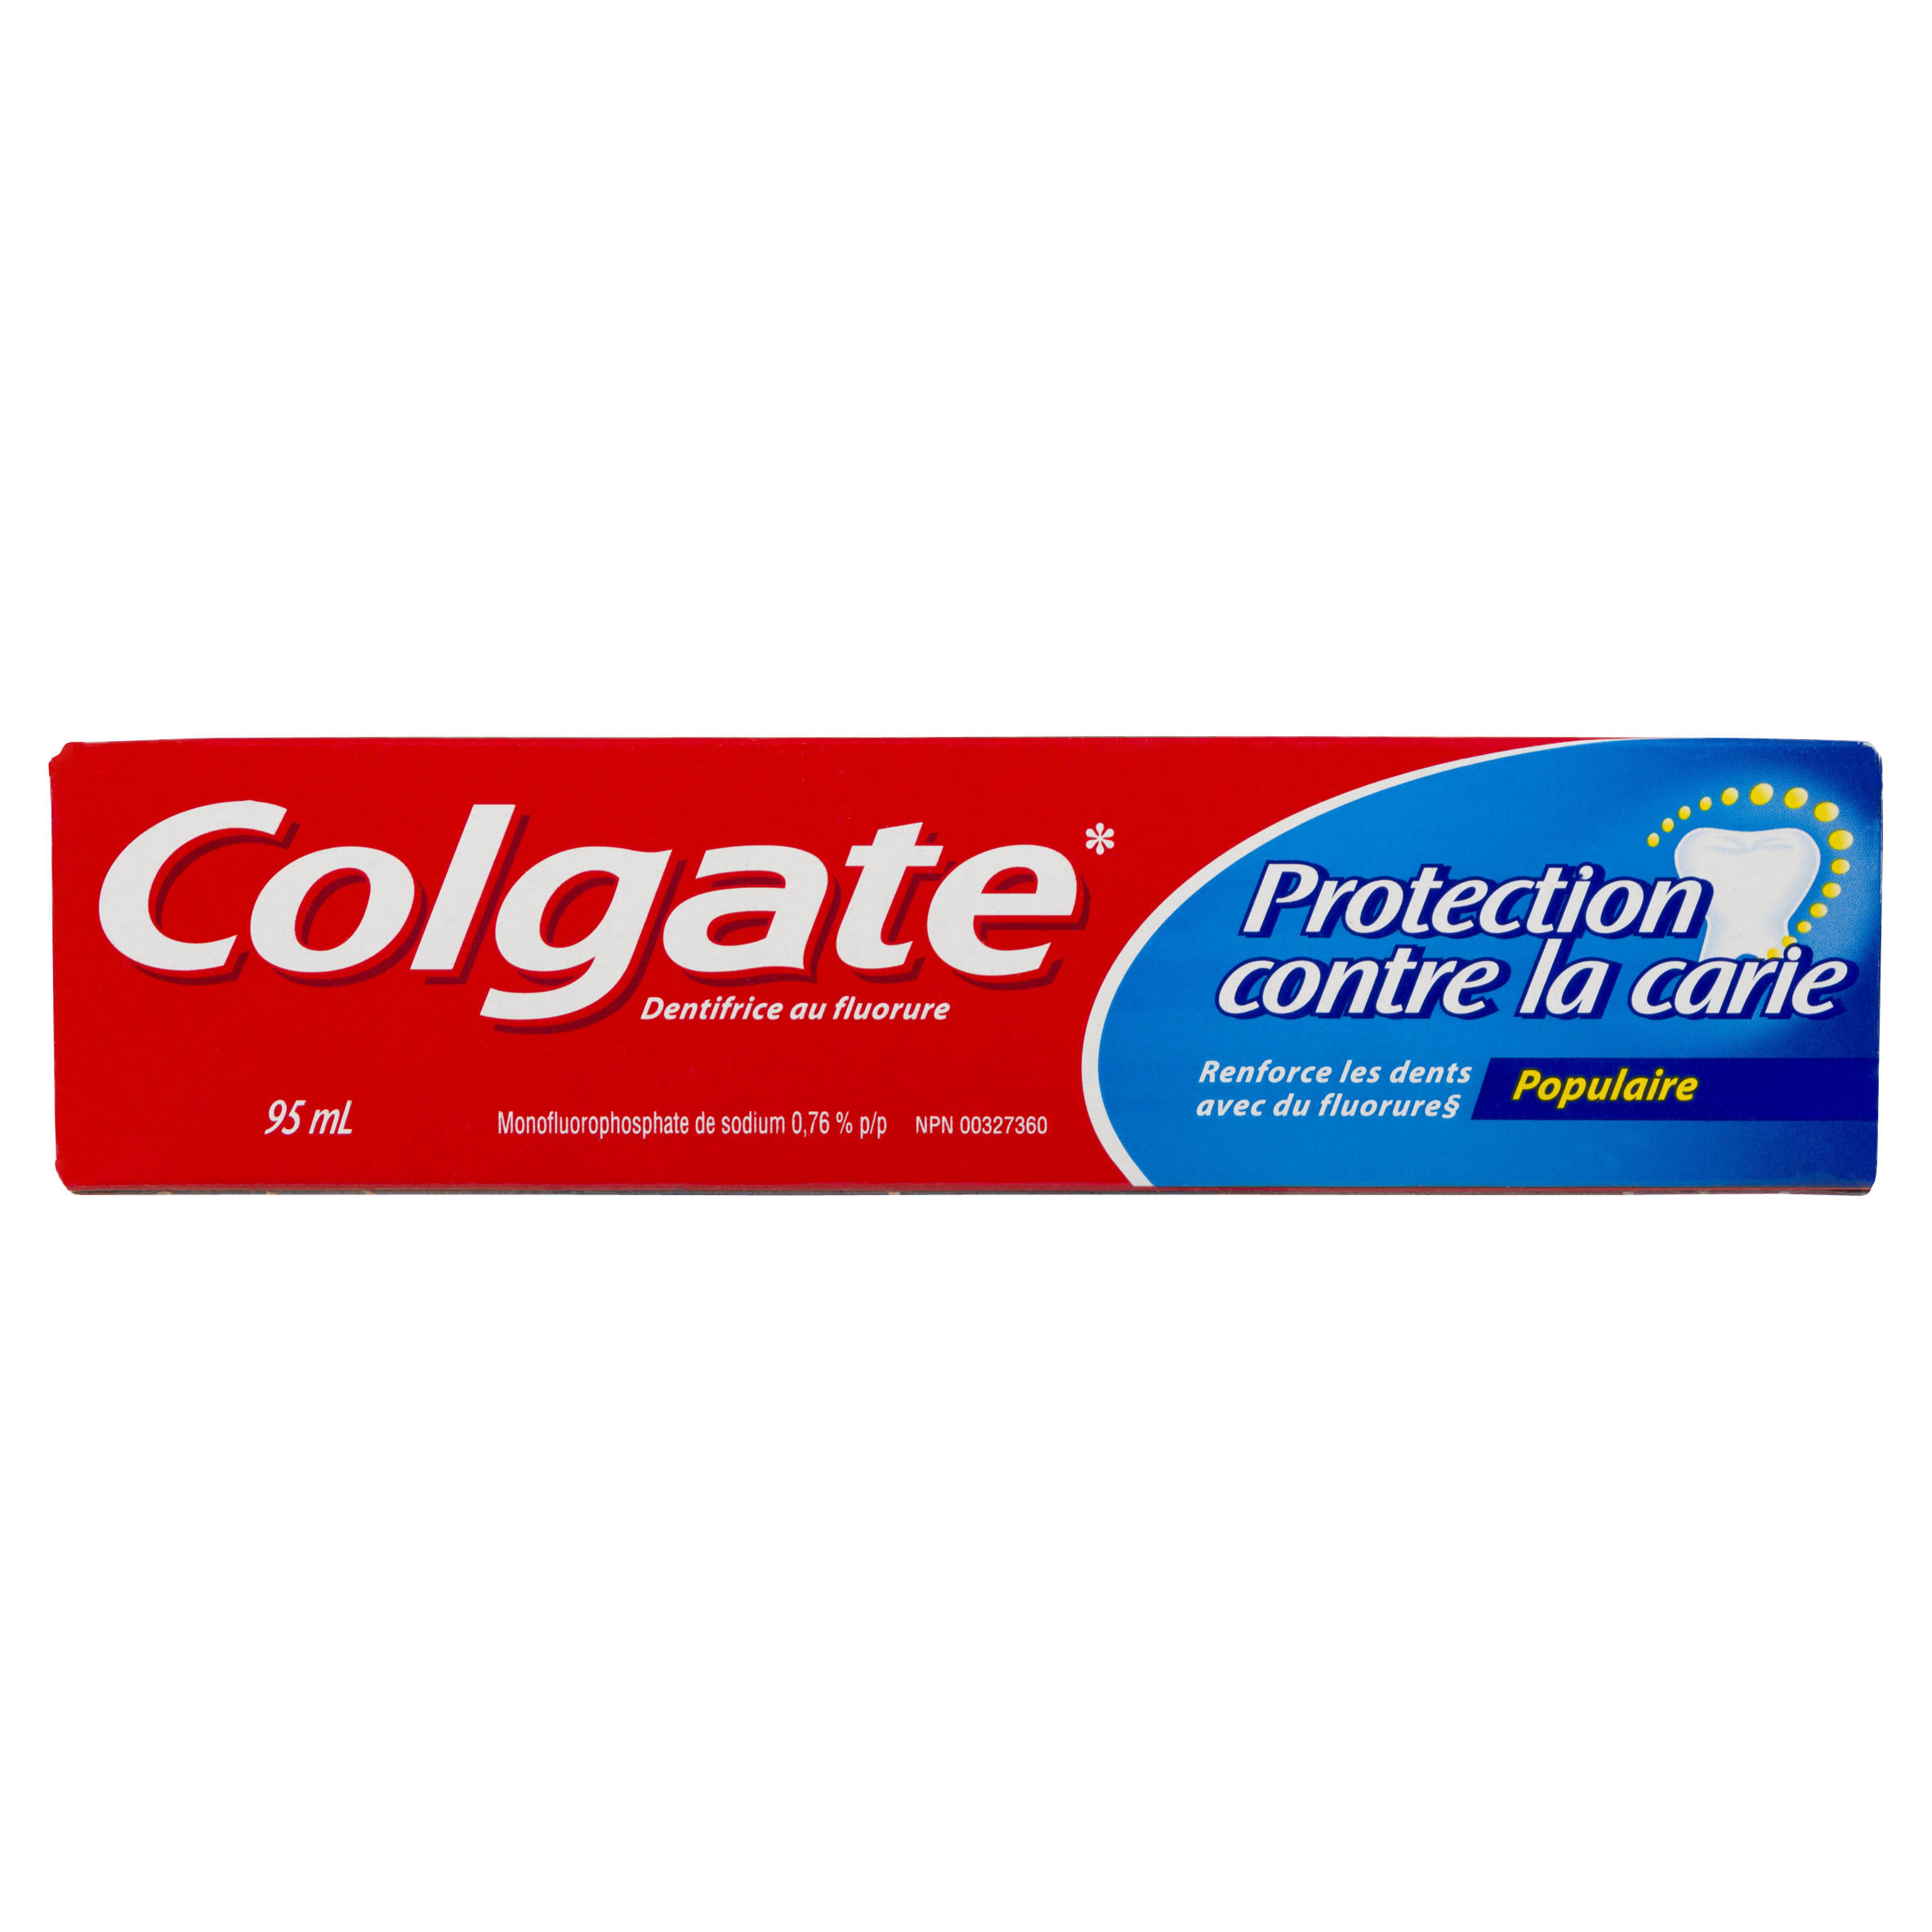 Colgate Cavity Protection Toothpaste - Regular, 95ml